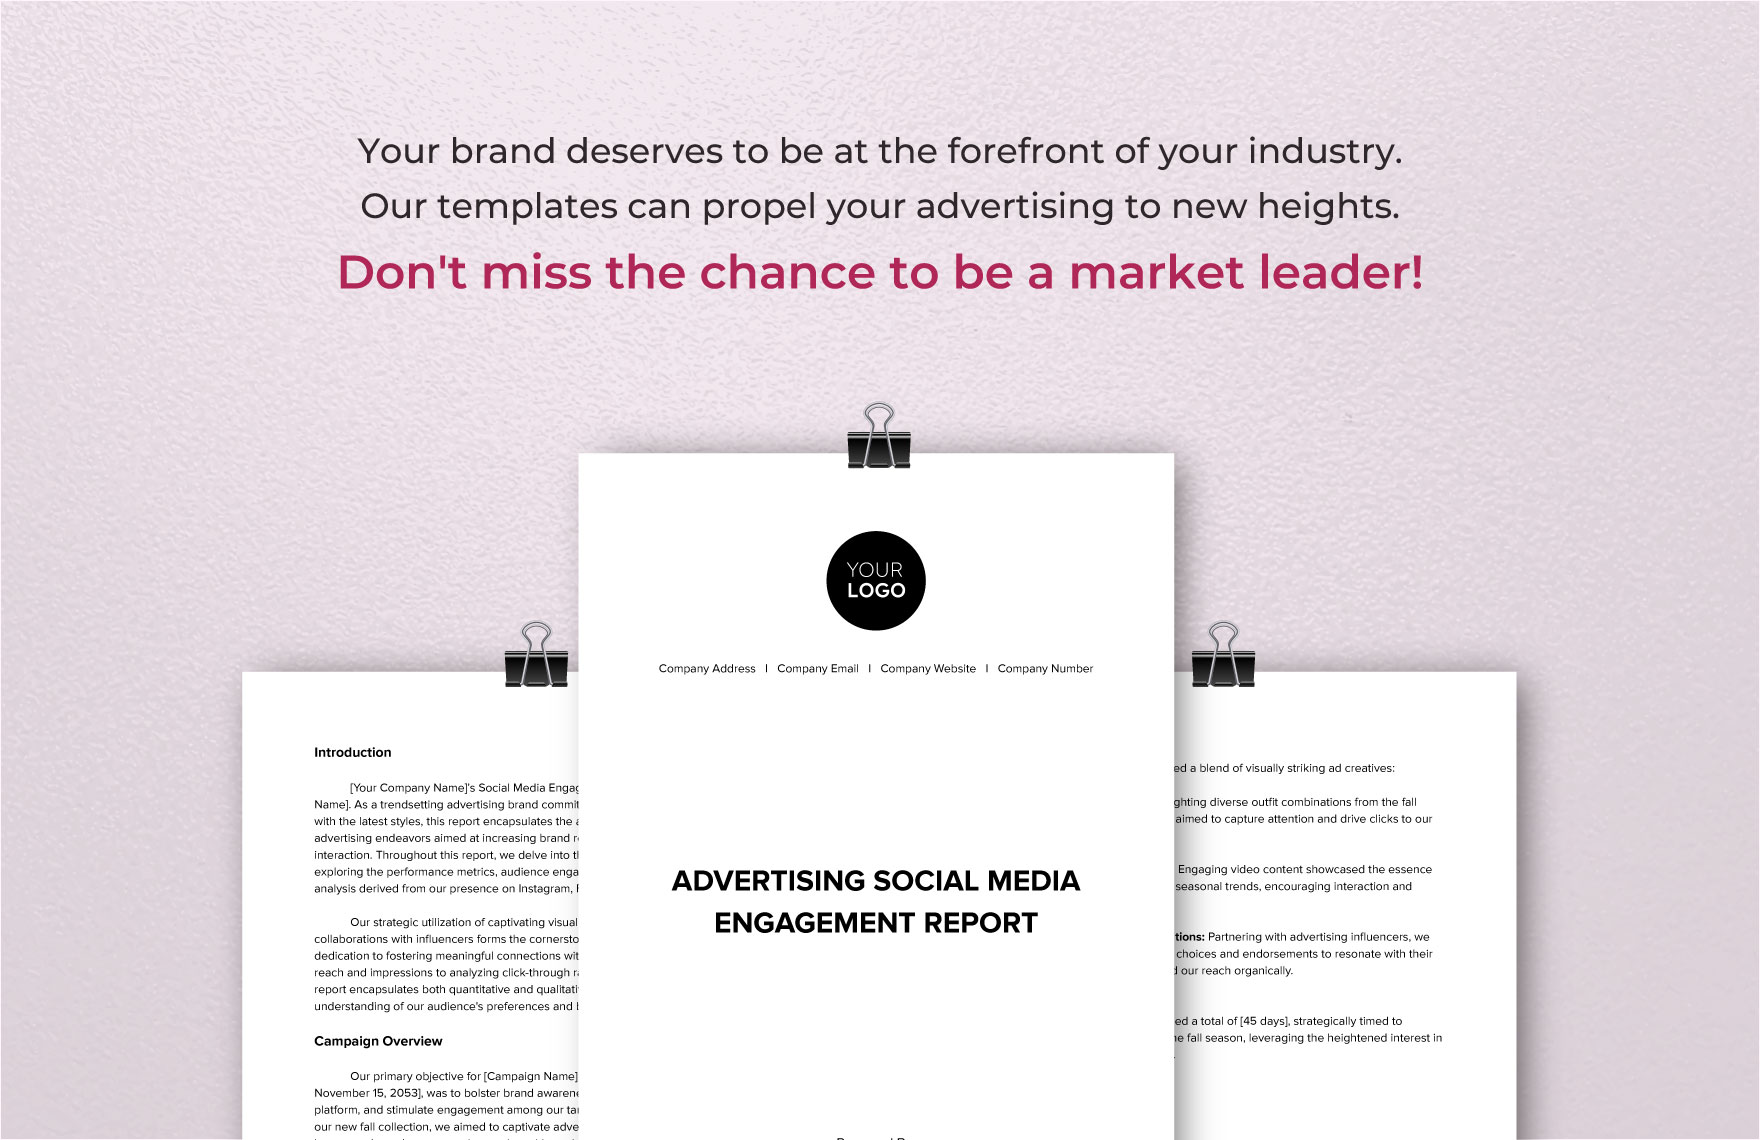 Advertising Social Media Engagement Report Template